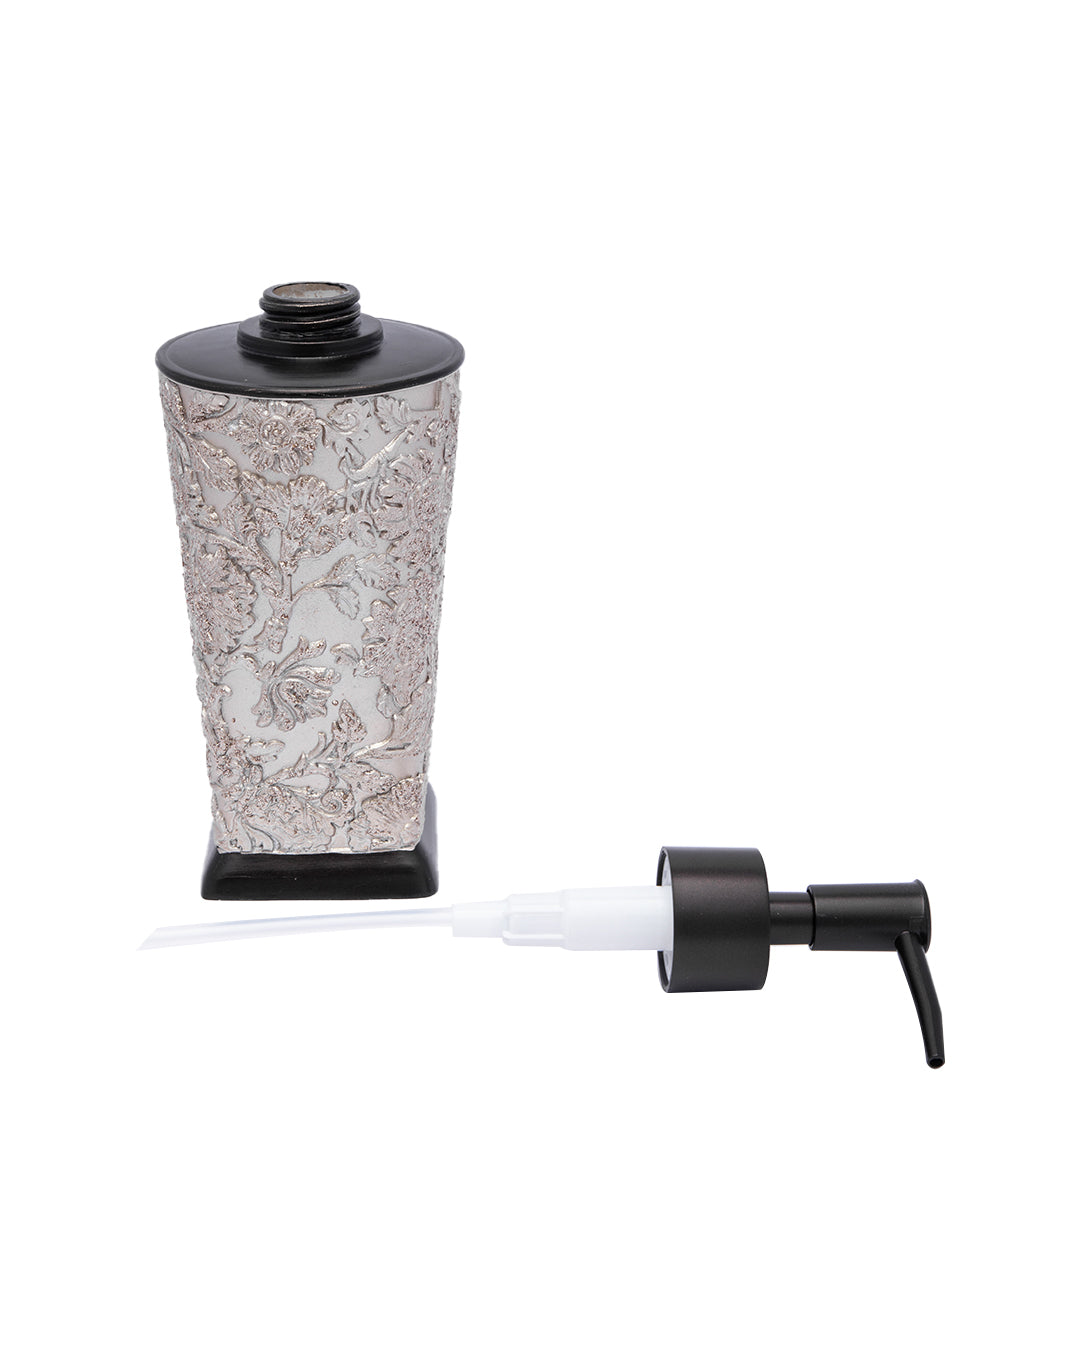 VON CASA Roman Soap Dispenser